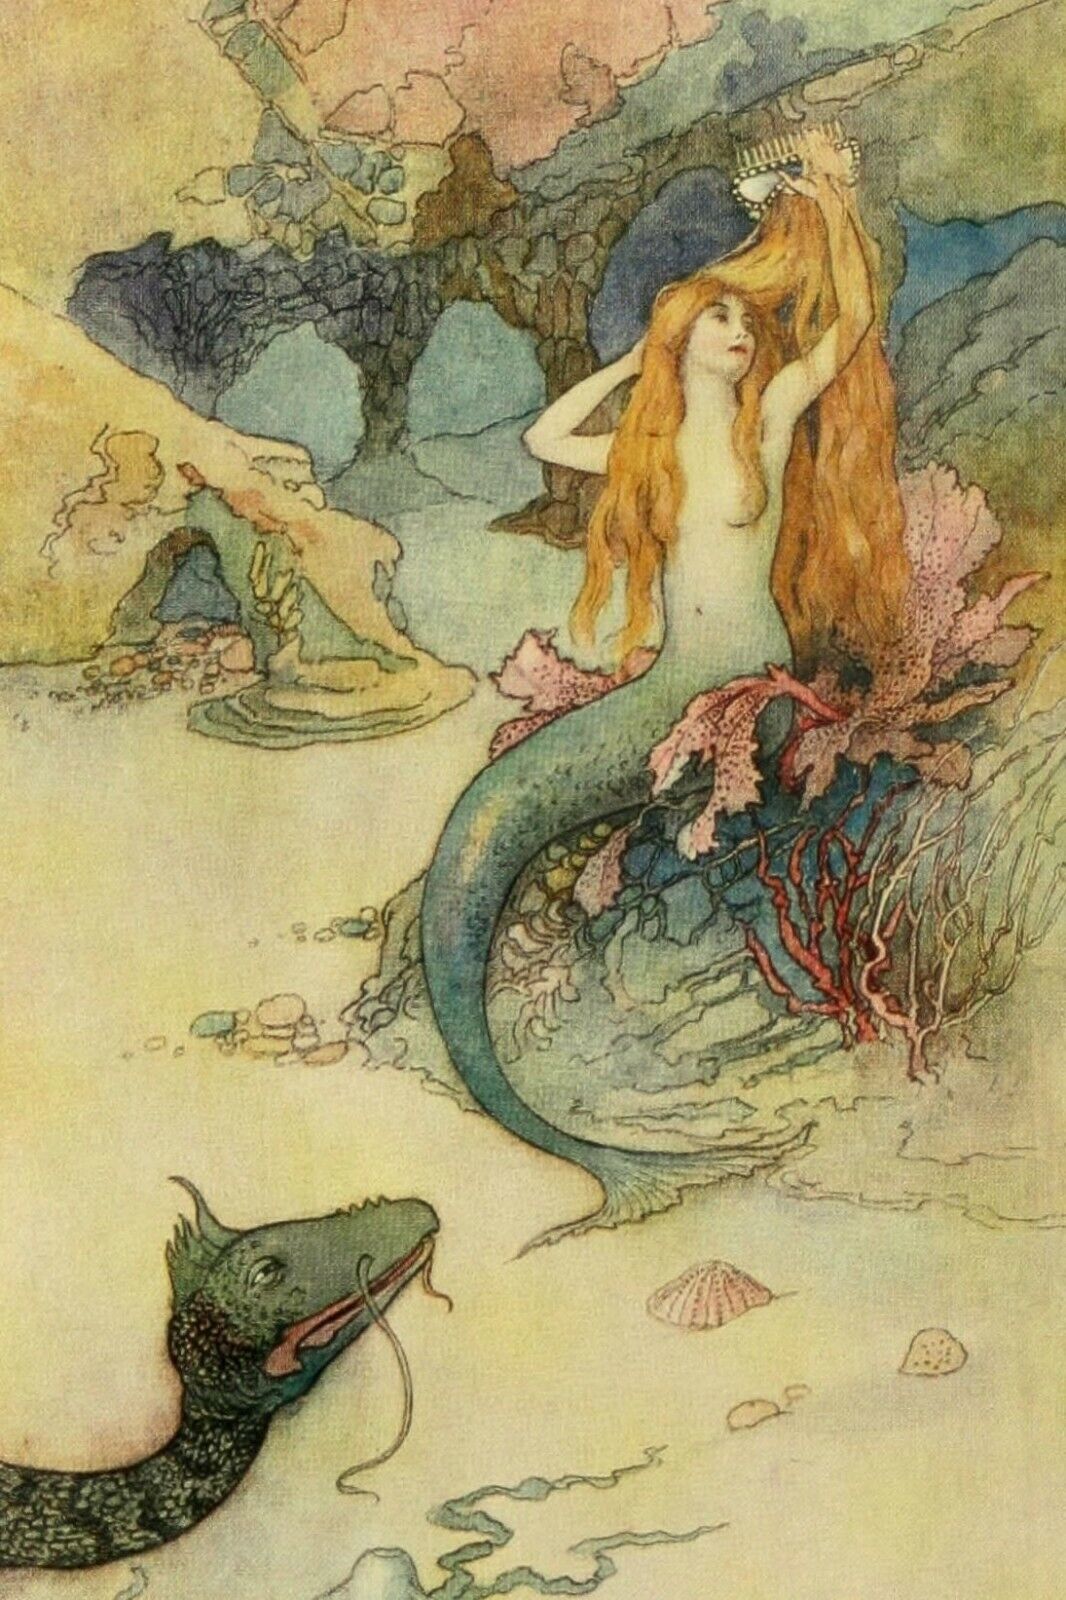 Modern Postcard: Mermaid and Sea Monster - Loch Ness - Nessie?